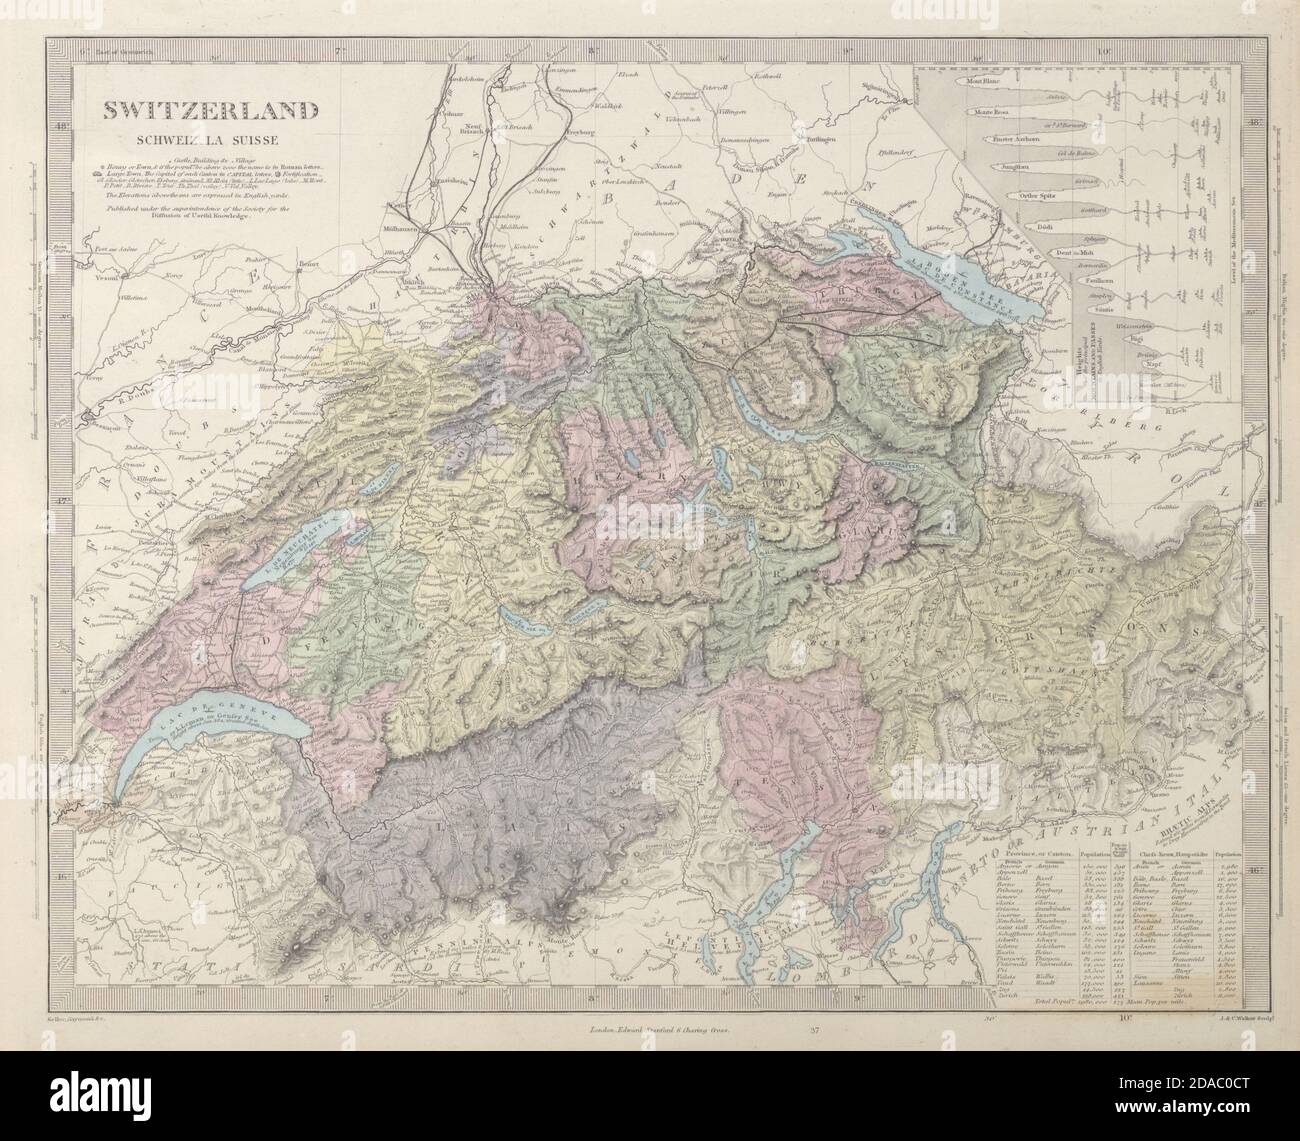 SWITZERLAND SCHWEIZ LA SUISSE. Inset heights of mountains, passes. SDUK 1857 map Stock Photo